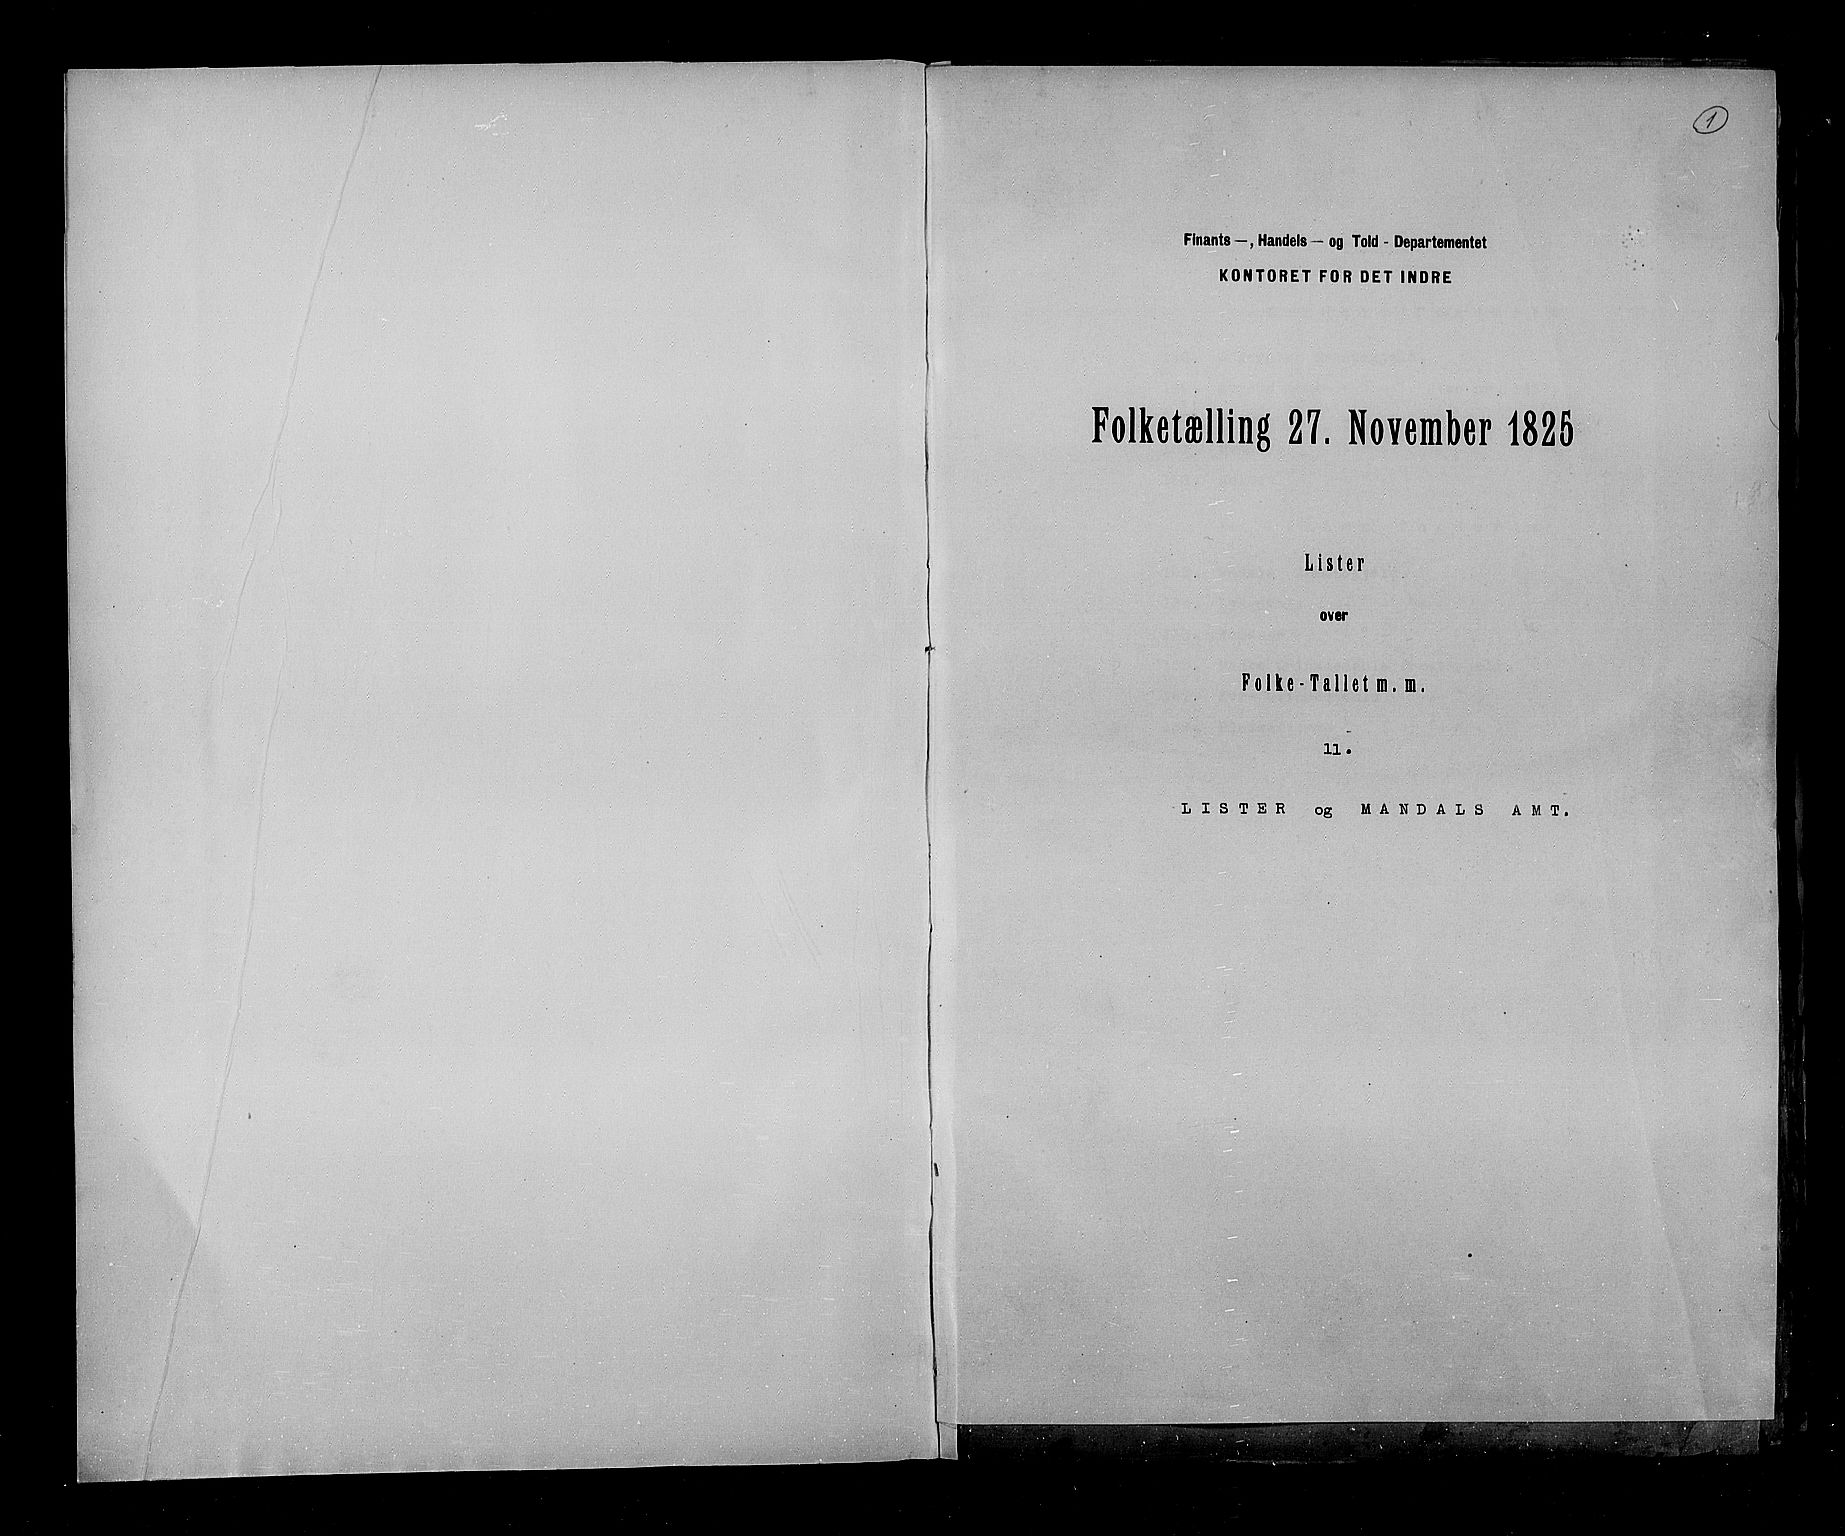 RA, Census 1825, vol. 11: Lister og Mandal amt, 1825, p. 1